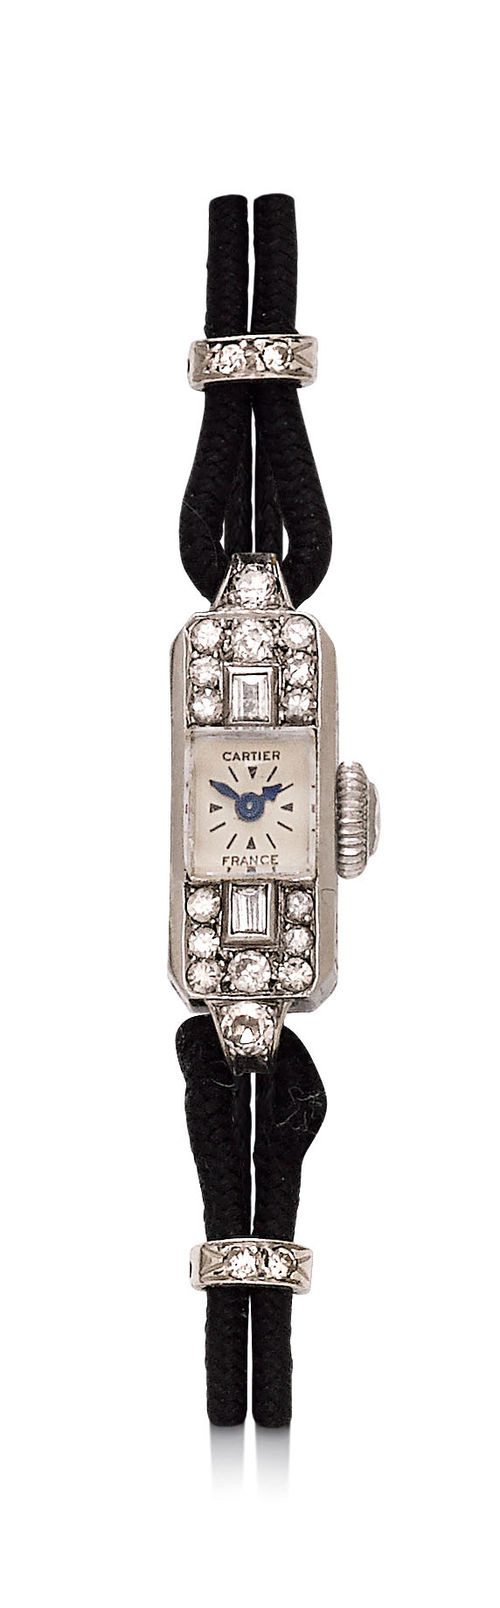 Cartier, diamond Art Deco lady's watch, ca. 1925.